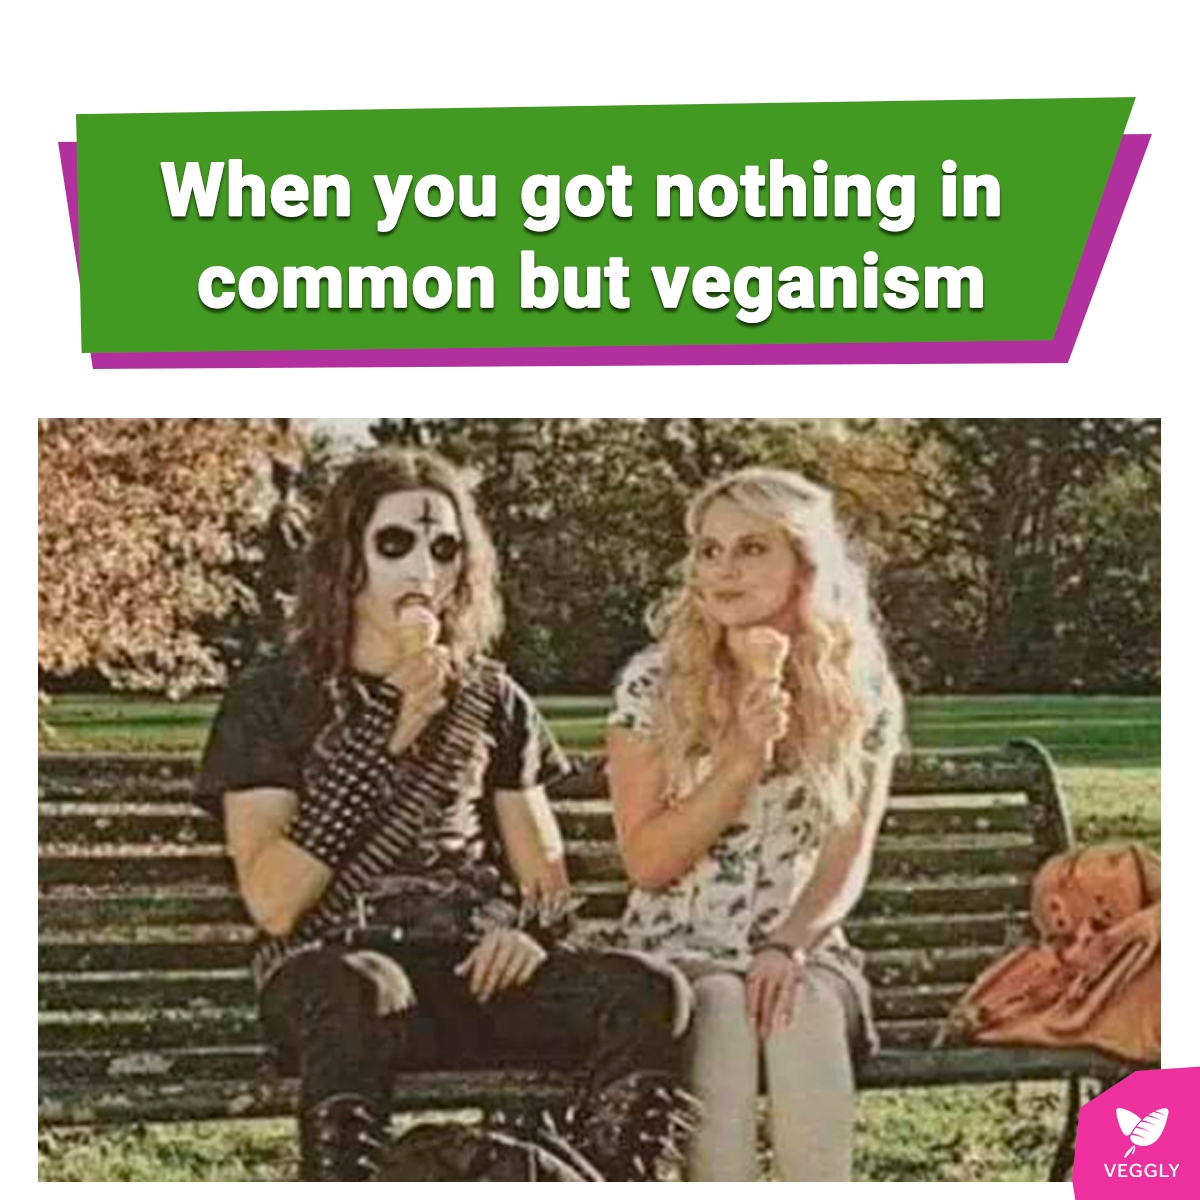 🤣🤣
.⁠
.⁠
.⁠
.⁠
.⁠
#veganlife  #govegan #vegansofig #plantbased   #vegetarian  #veganlifestyle  #veganforlife #veganlove #vegansofinstagram #veganpower #relationship